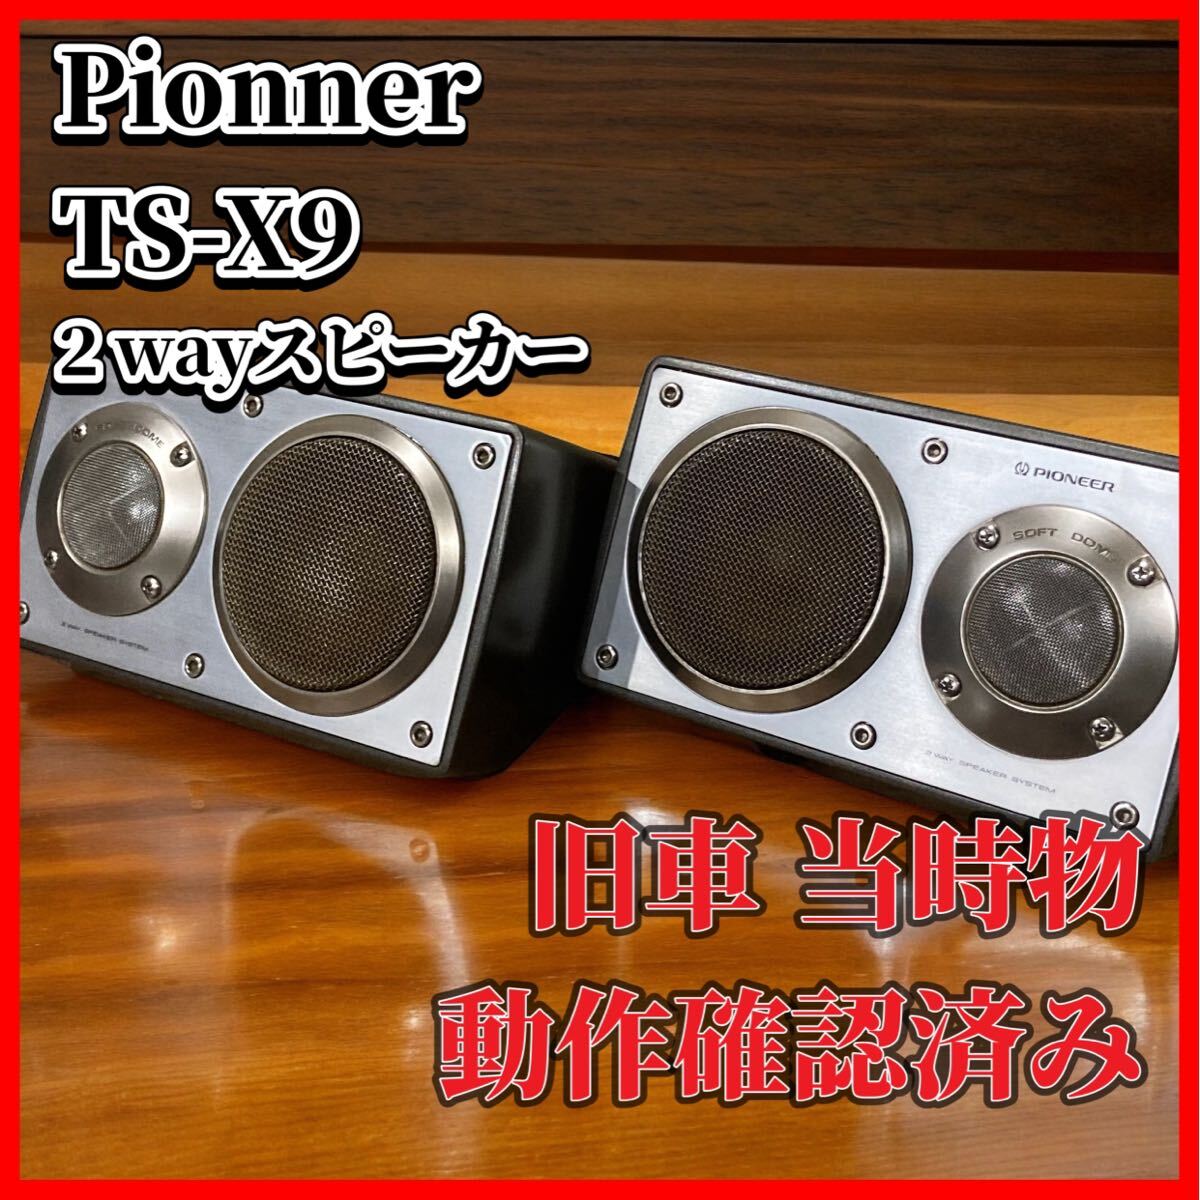 Pionner 2way speakers TS-X9 パイオニア 旧車 当時ものの画像1